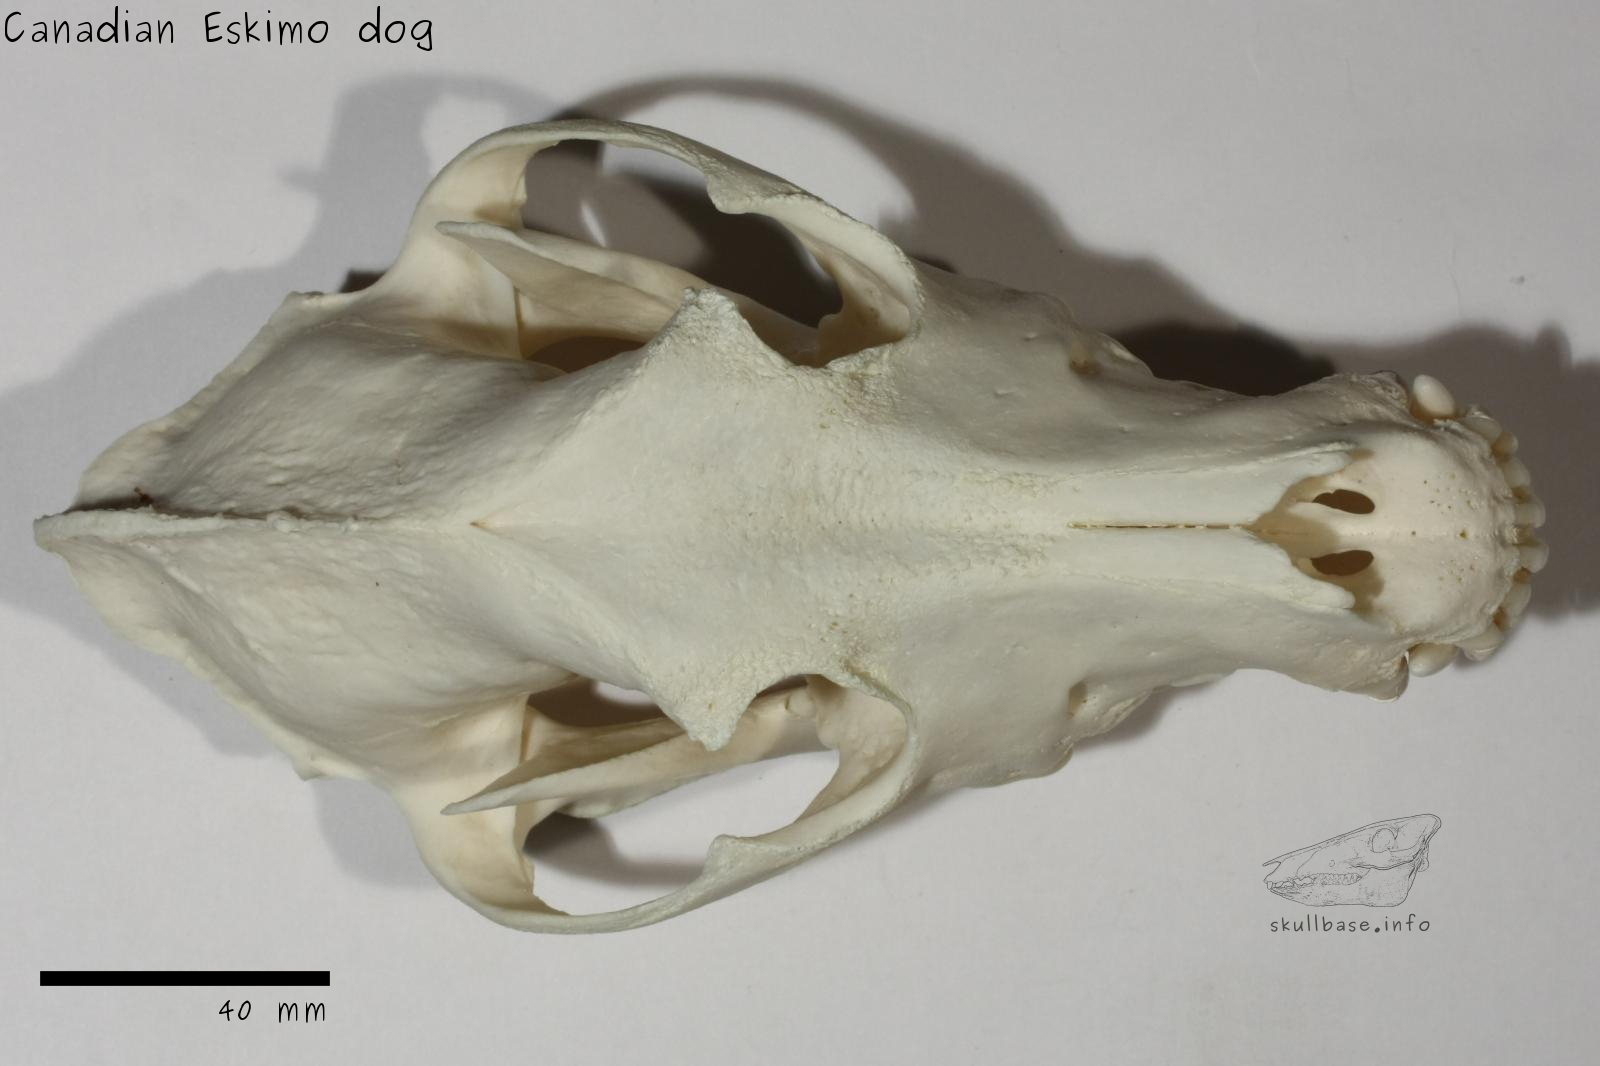 Canadian Eskimo dog (Canis lupus familiaris) skull dorsal view